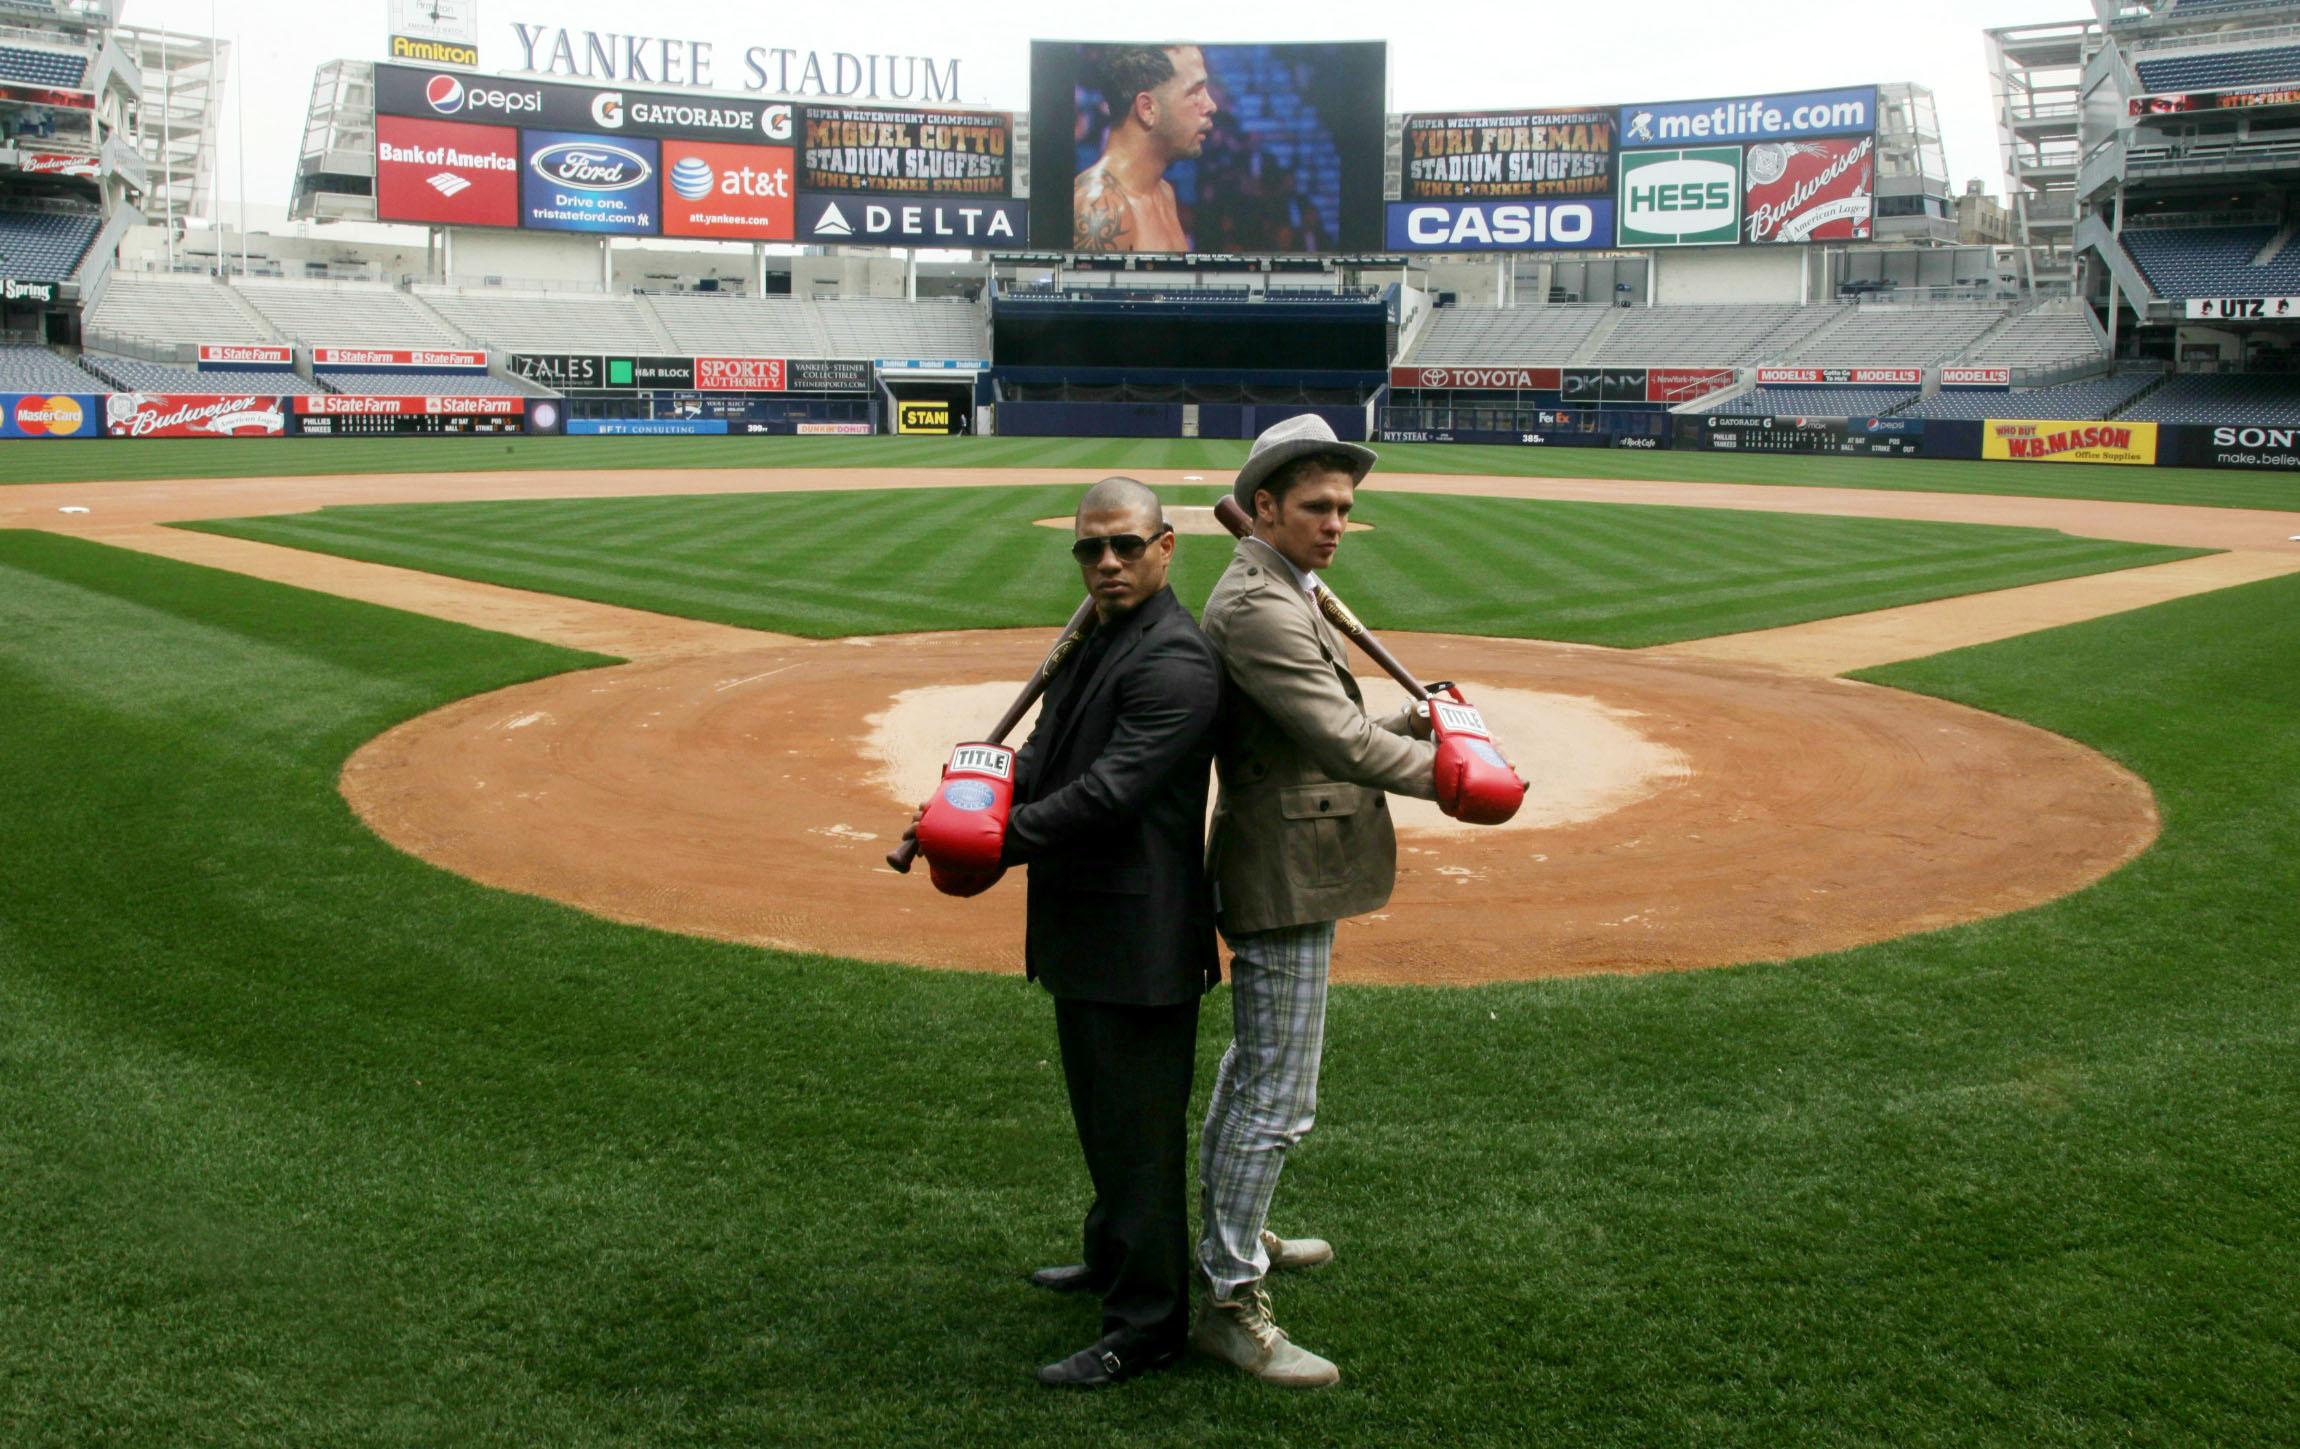 boxning, Yankee Stadium, Miguel Cotto, Yuri Foreman, New York